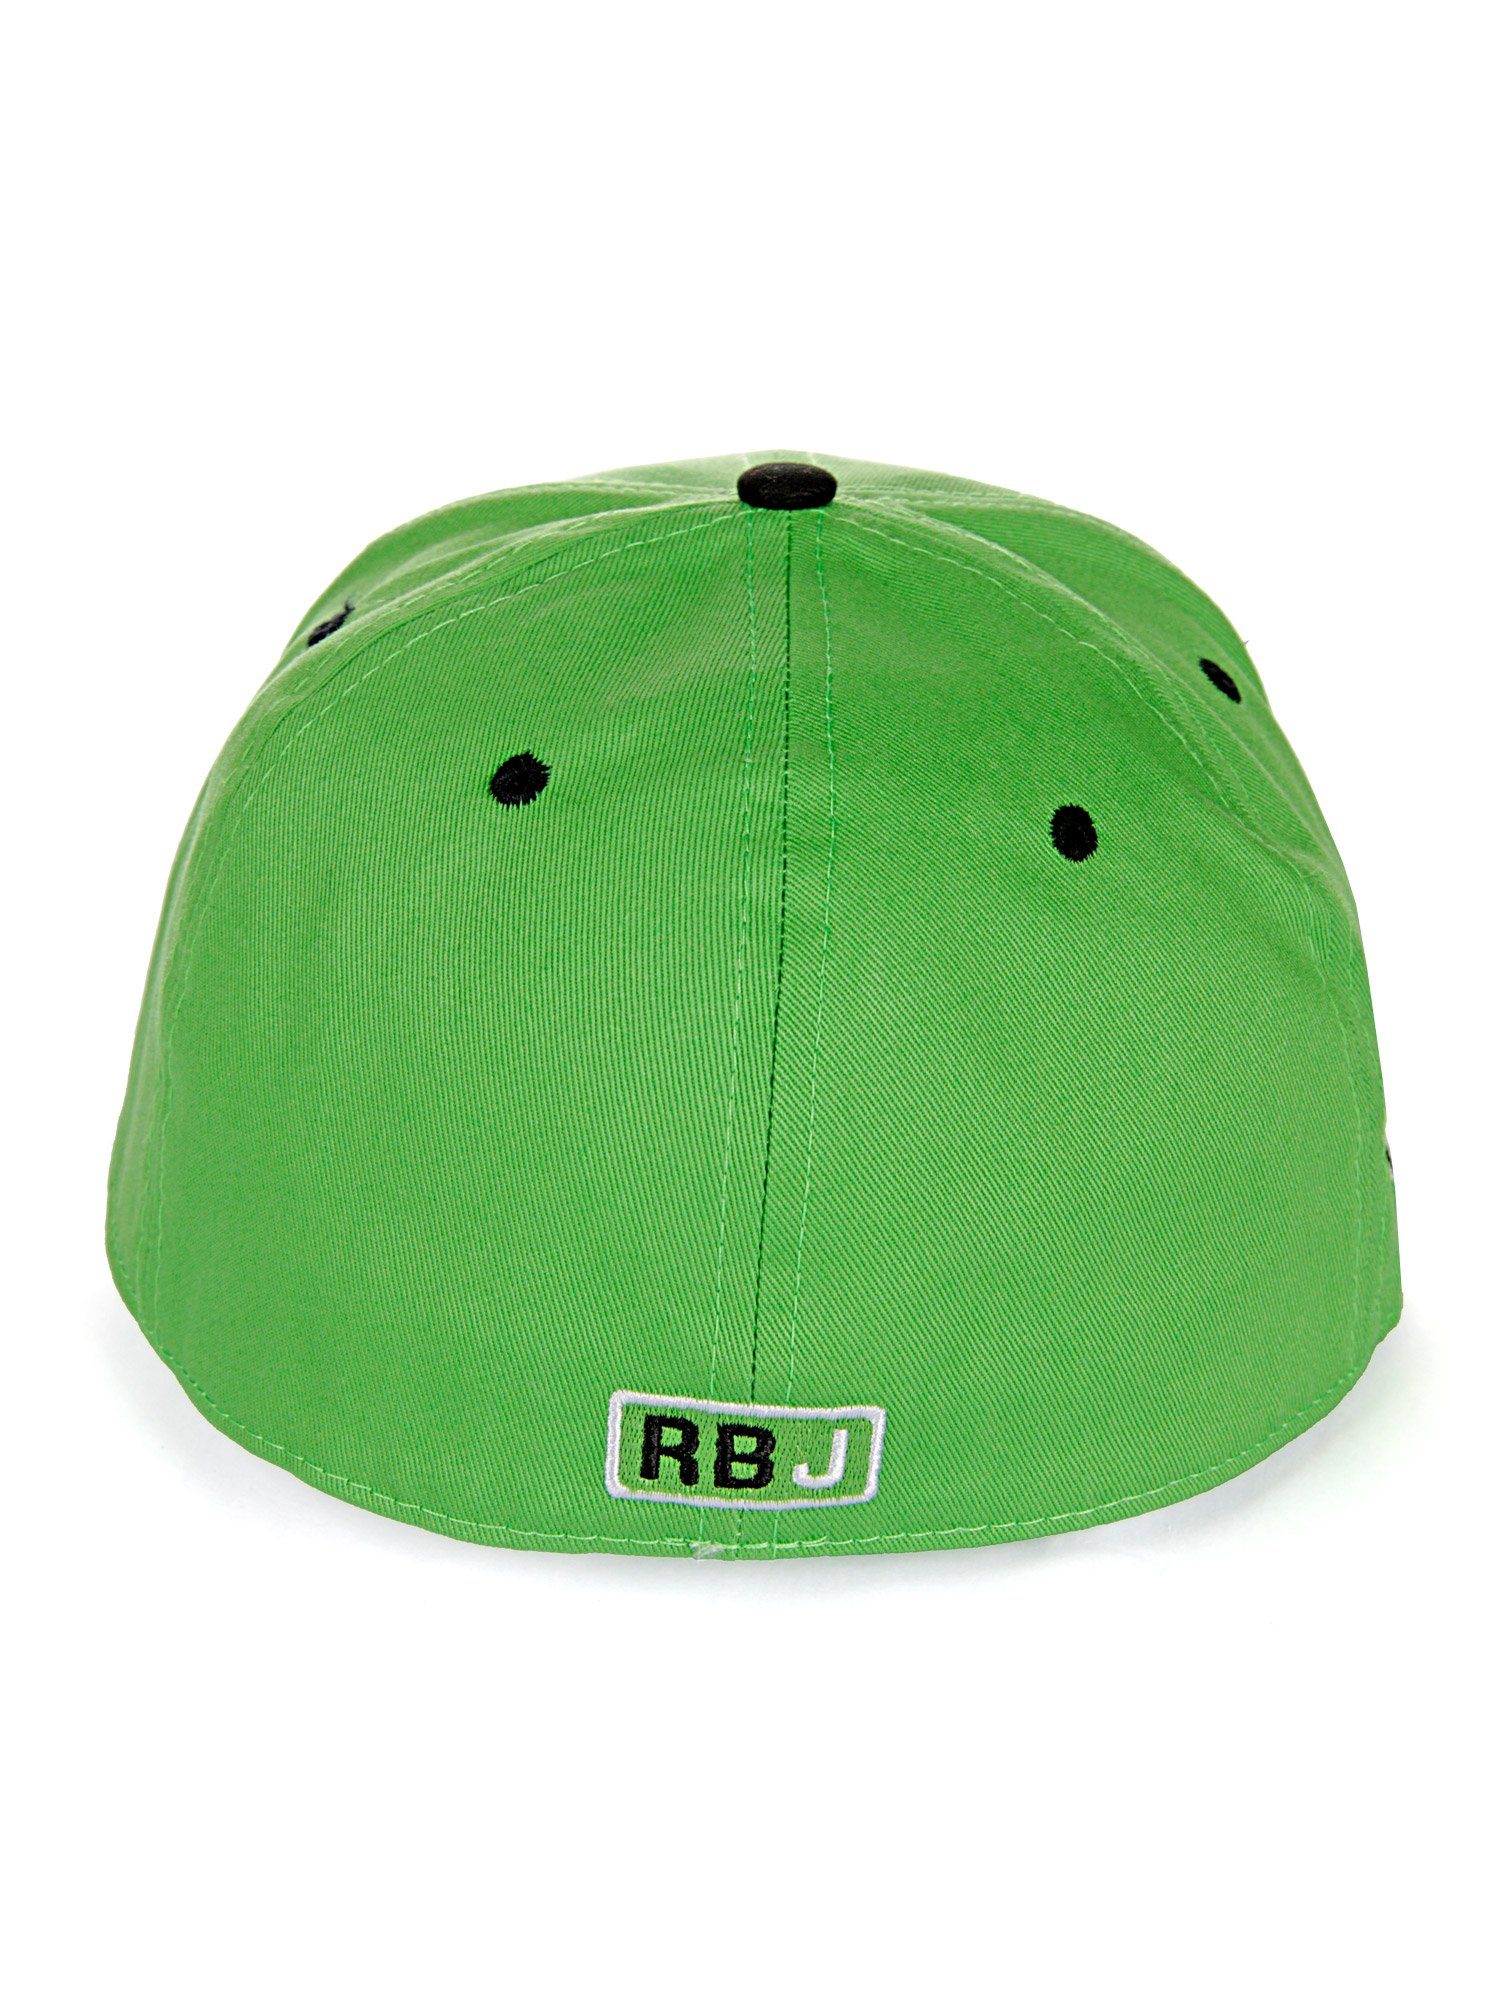 RedBridge Baseball Cap Durham mit Schirm grün-schwarz kontrastfarbigem